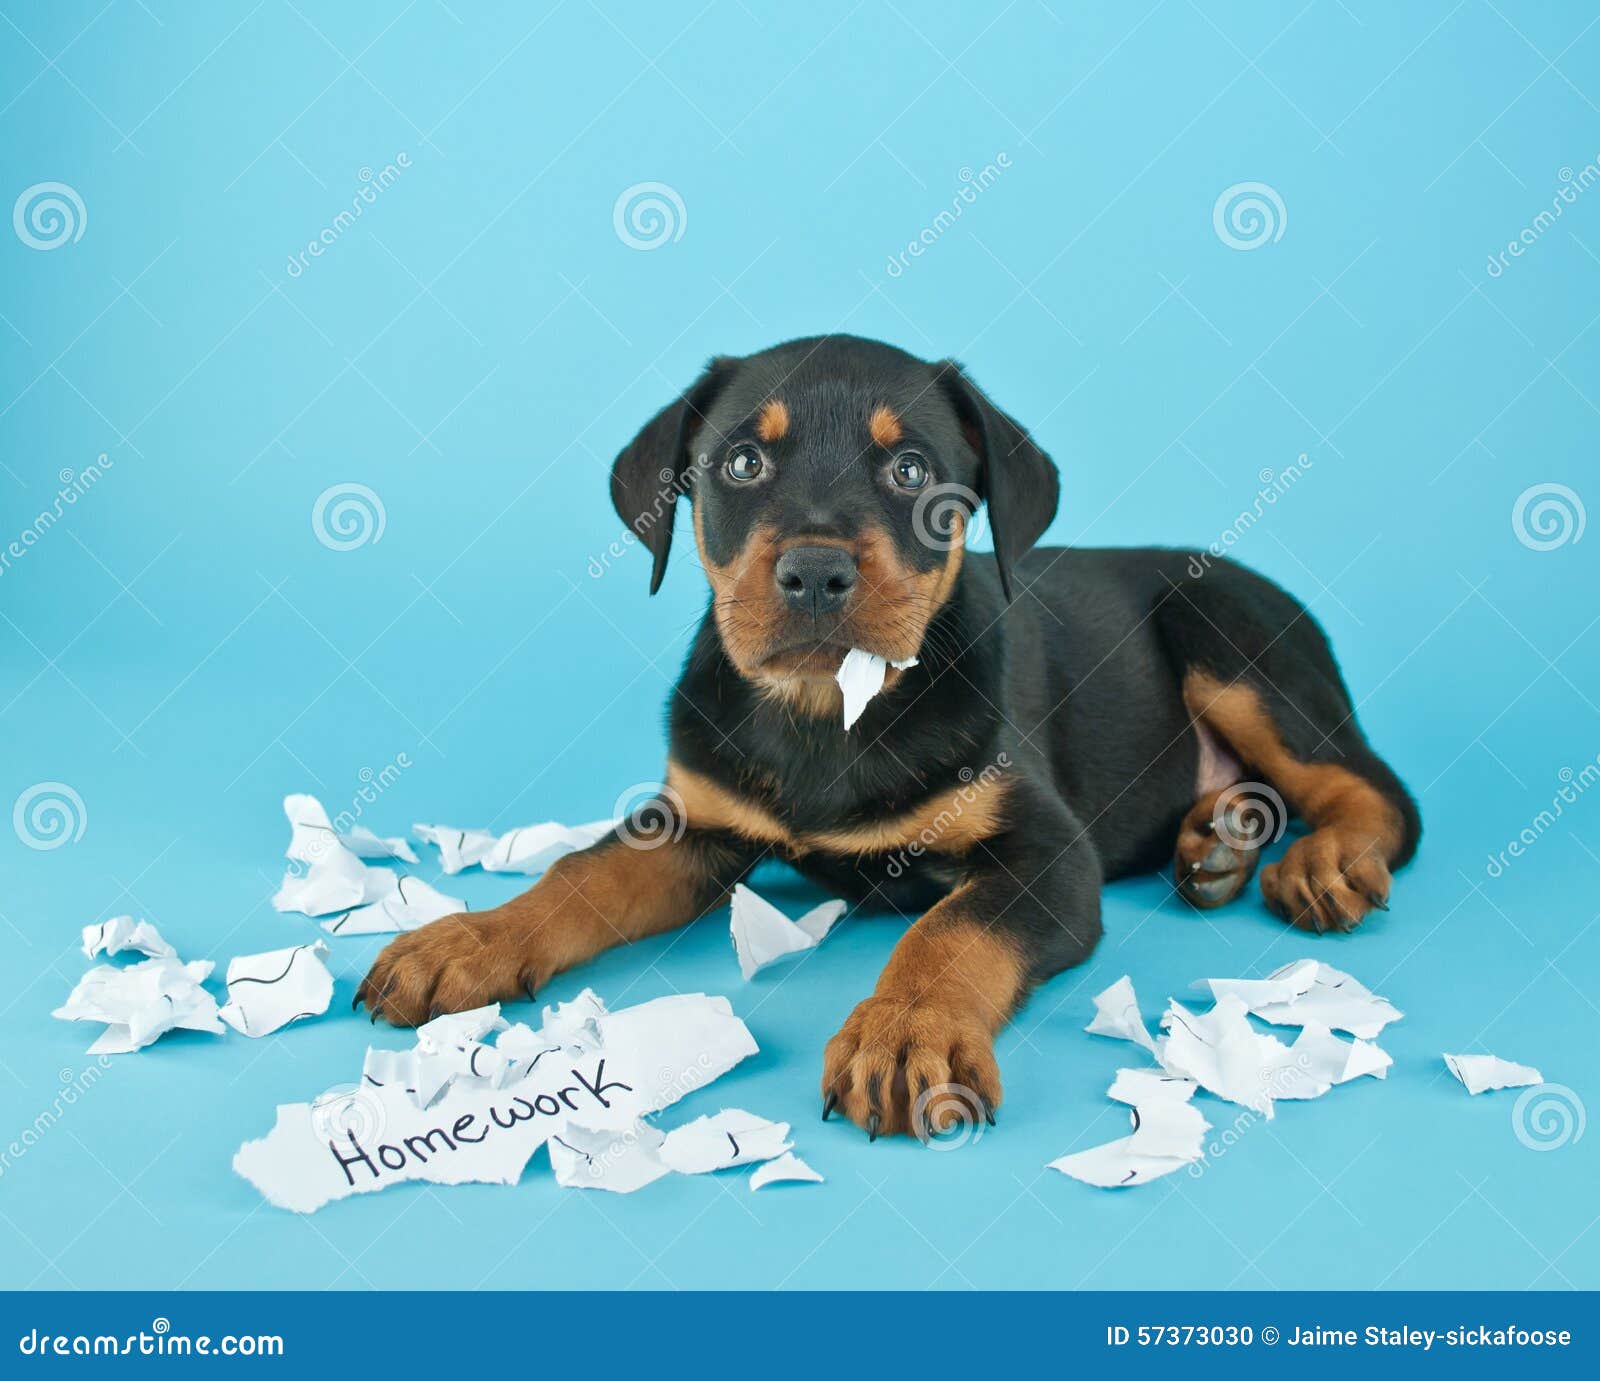 dog ate homework clipart - photo #32